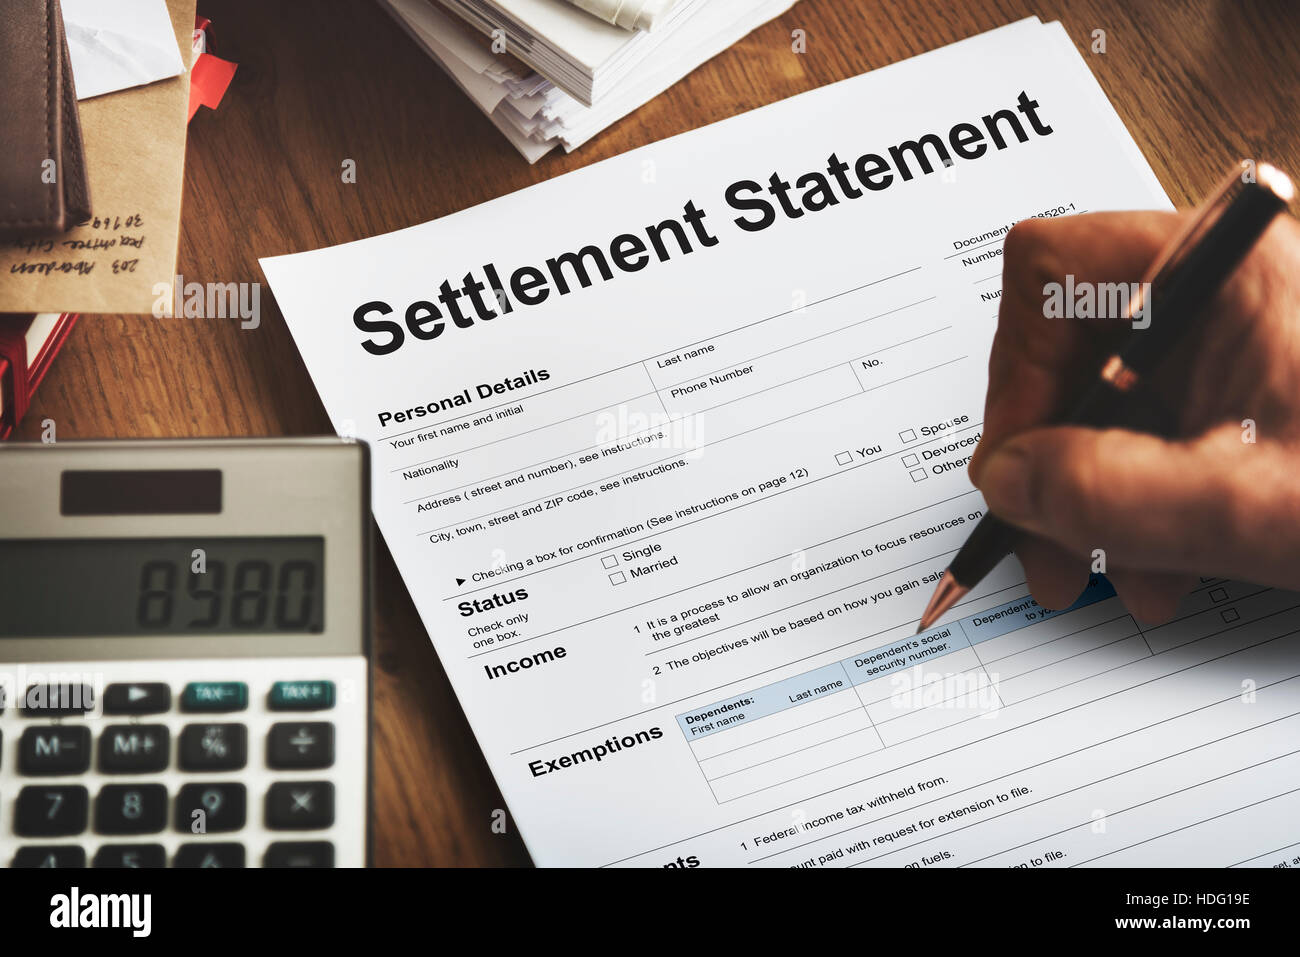 Settlement Statement Form Financial Concept Stock Photo